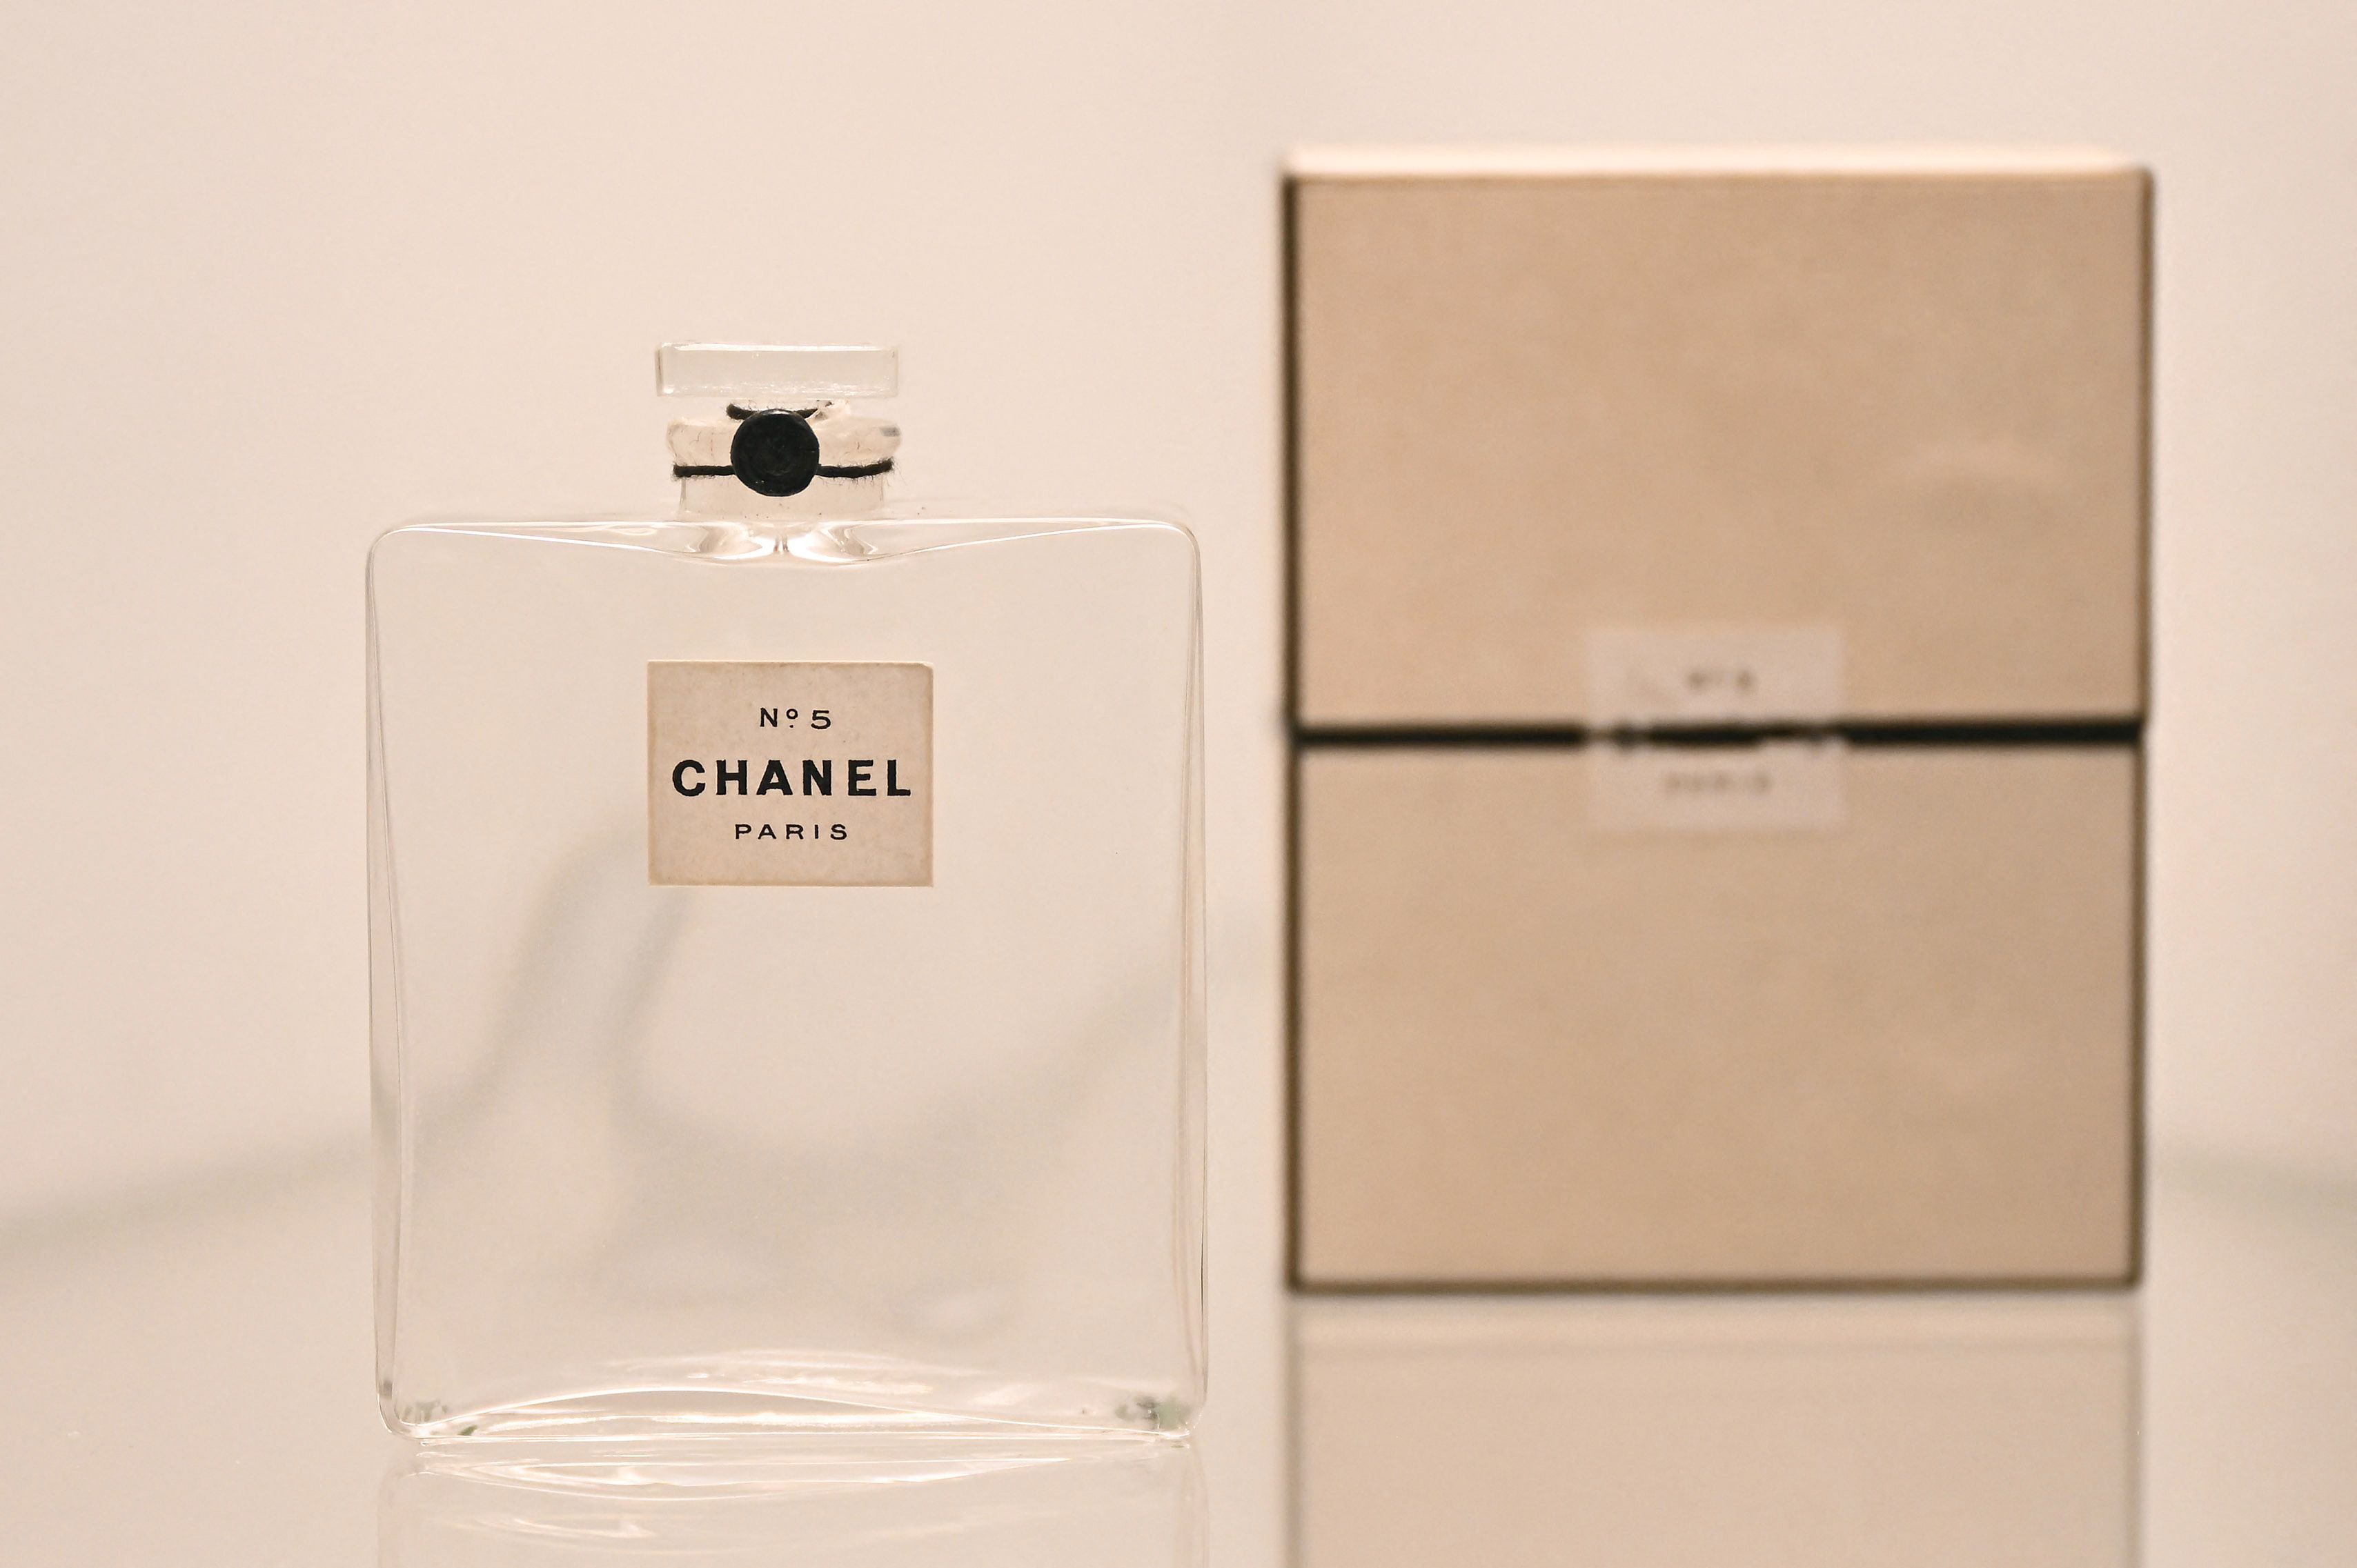 New Letter Reveals Queen Elizabeth's Love of Chanel No. 5